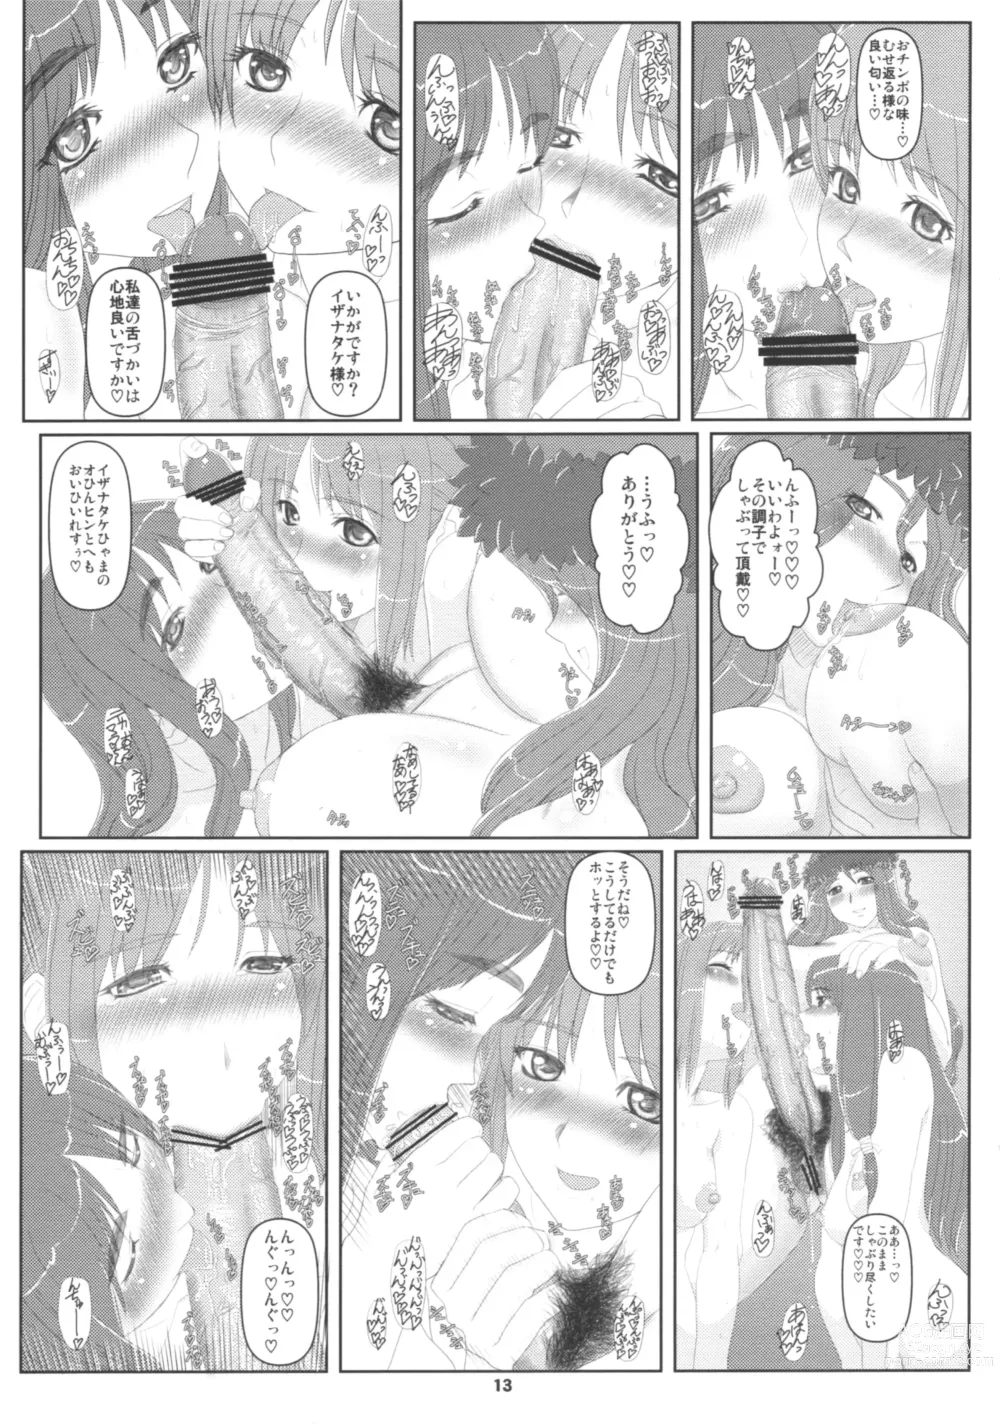 Page 12 of doujinshi Hime Awabi Hime Matsutake Sono 4-jou